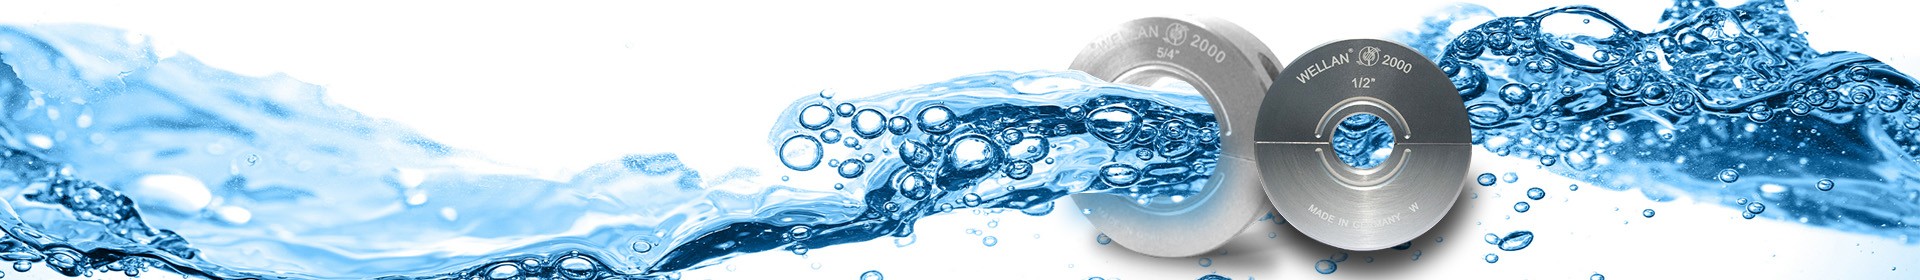 Wellan® eco-friendly water treatment